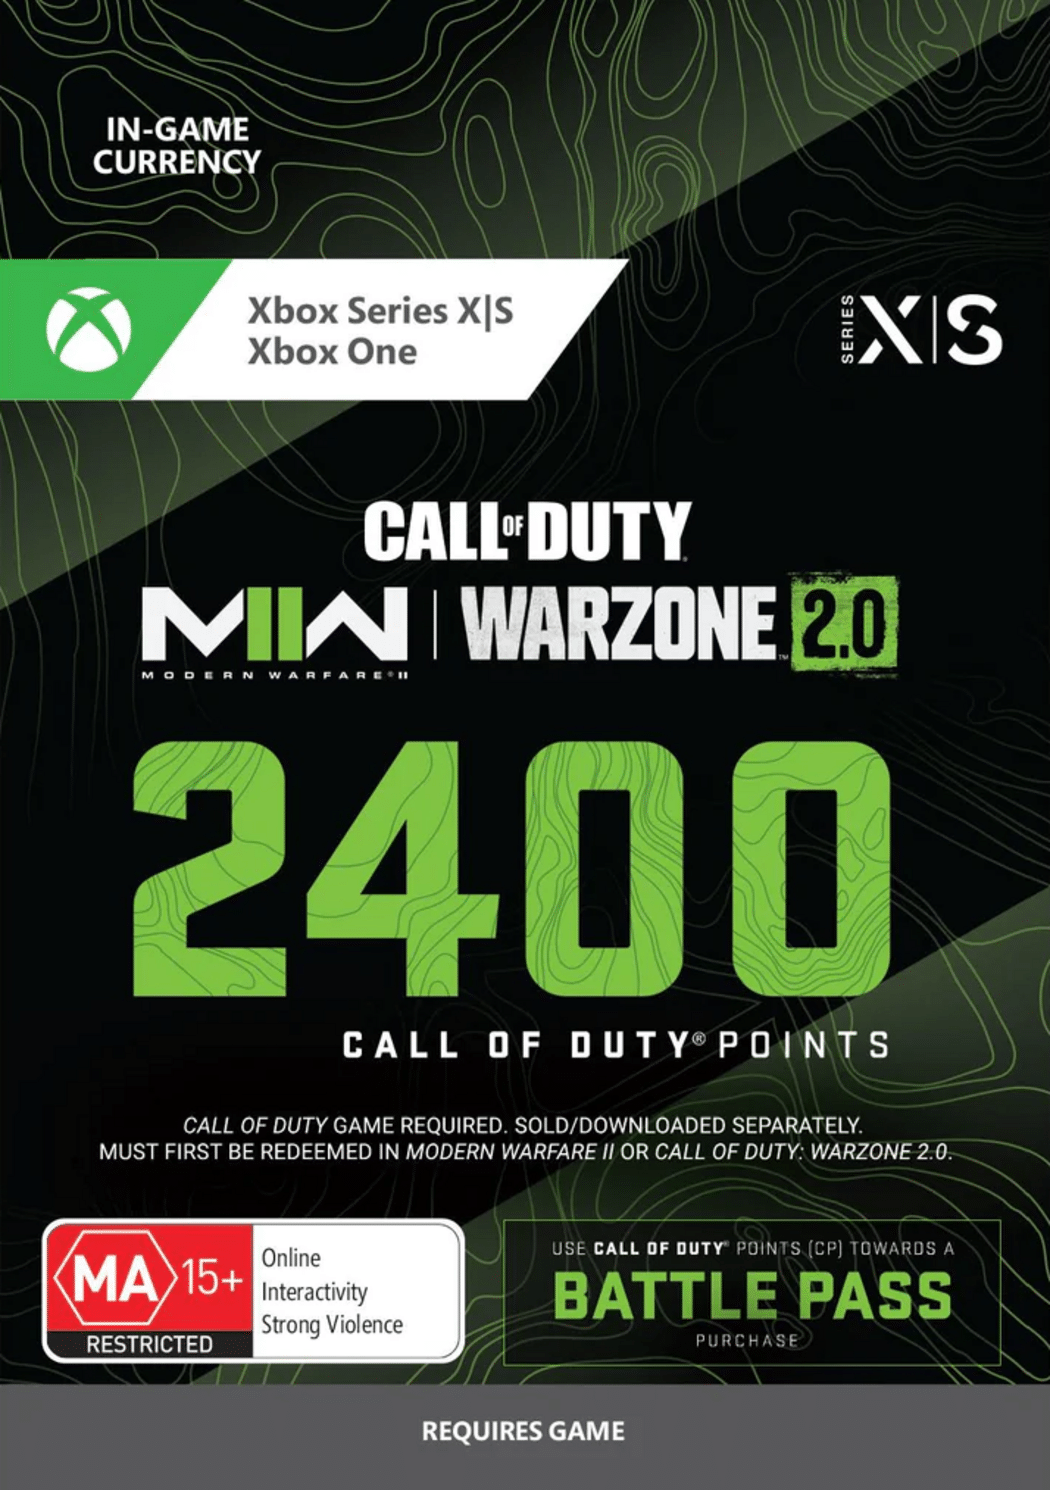 Call of Duty: Modern Warfare II and Call of Duty: Warzone 2.0